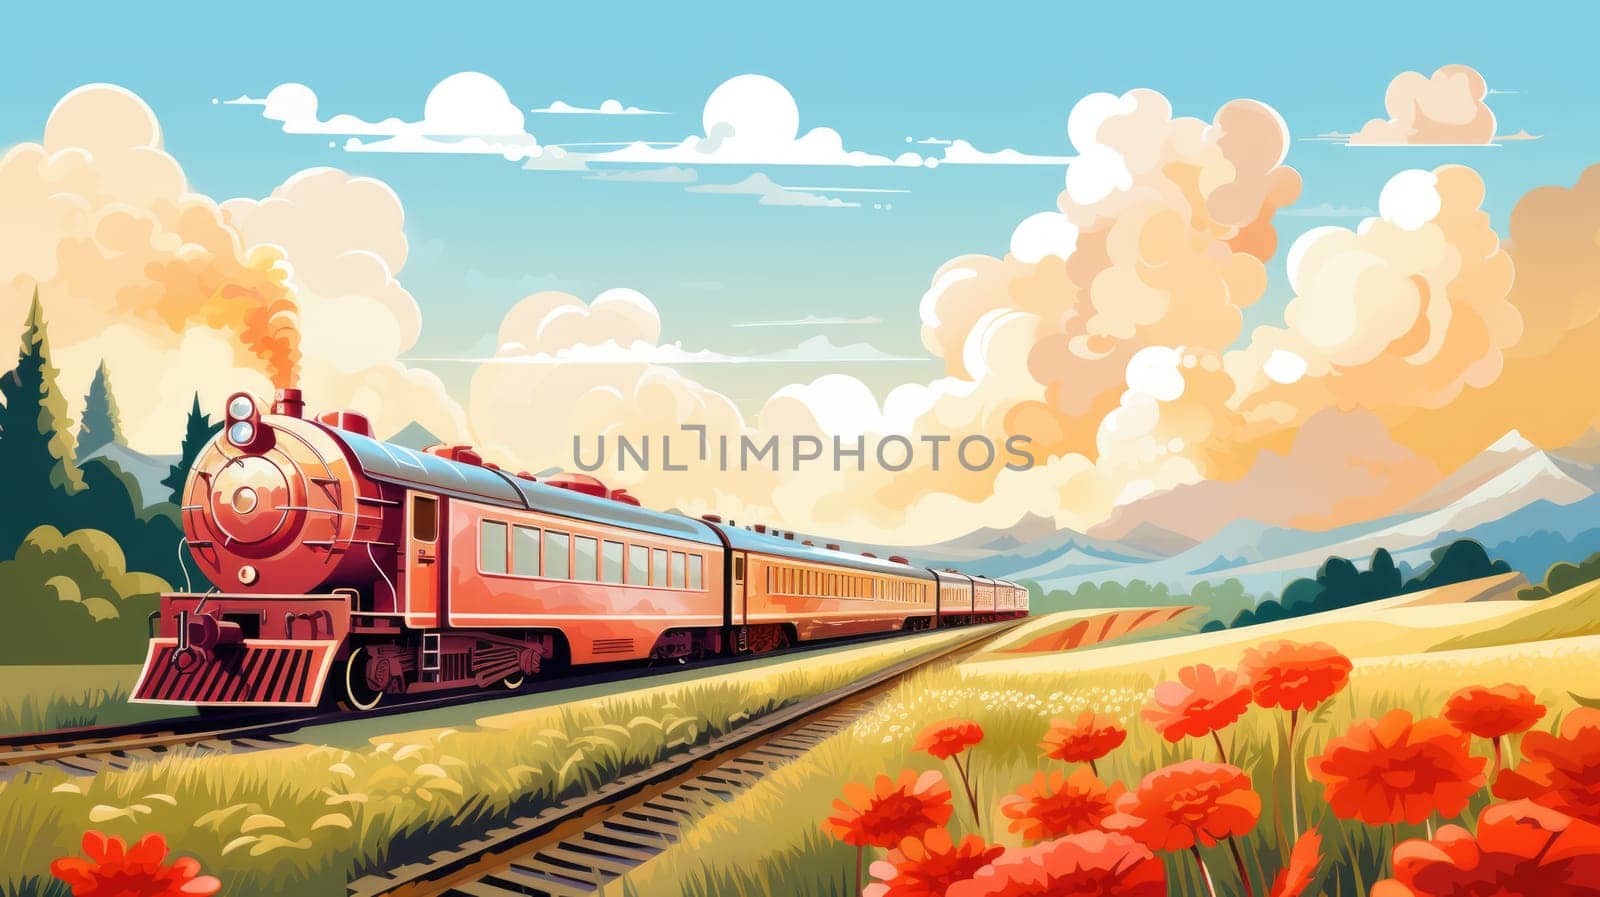 Train journey photo realistic illustration - AI generated. Train, tree, mountain, clouds.